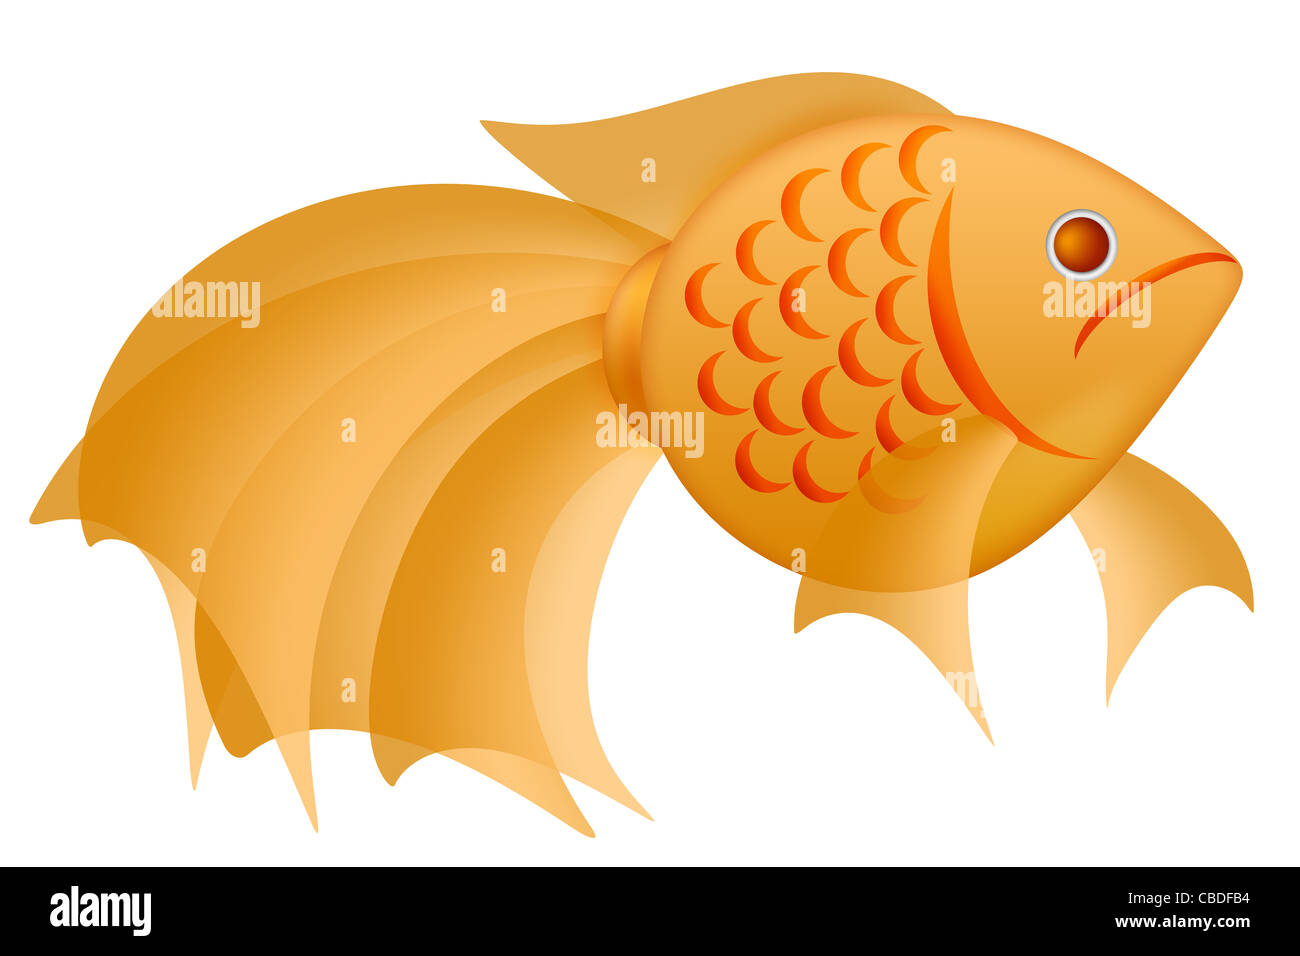 goldfish clipart images